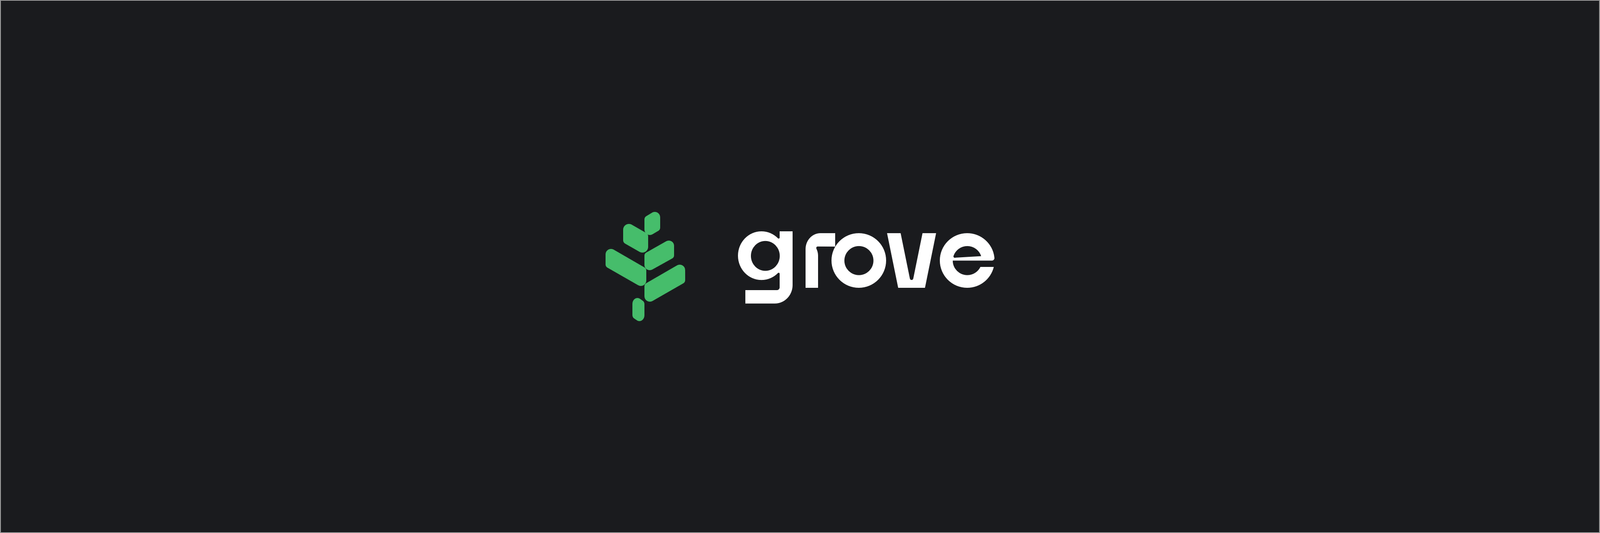 Grove Brand